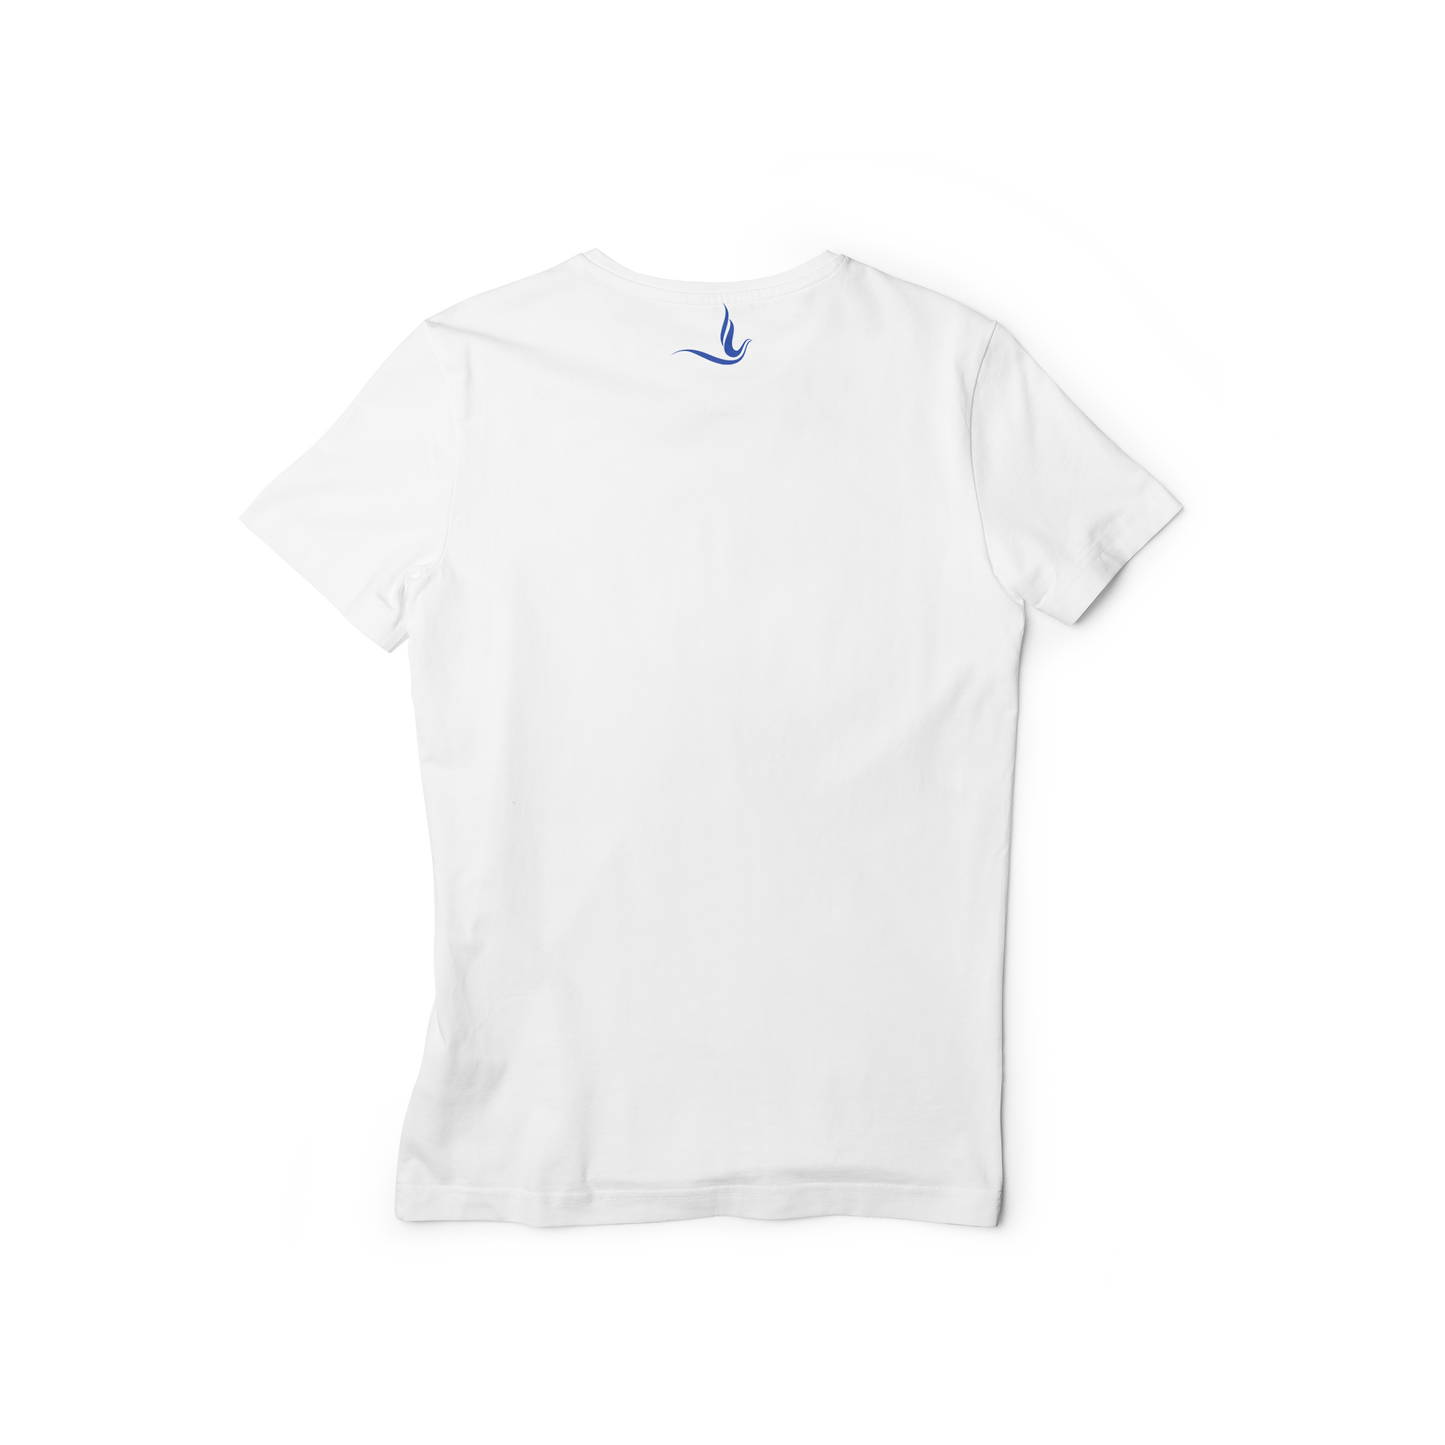 Zeta Phi Beta Retro Gamer Design T-Shirt & Hoodie